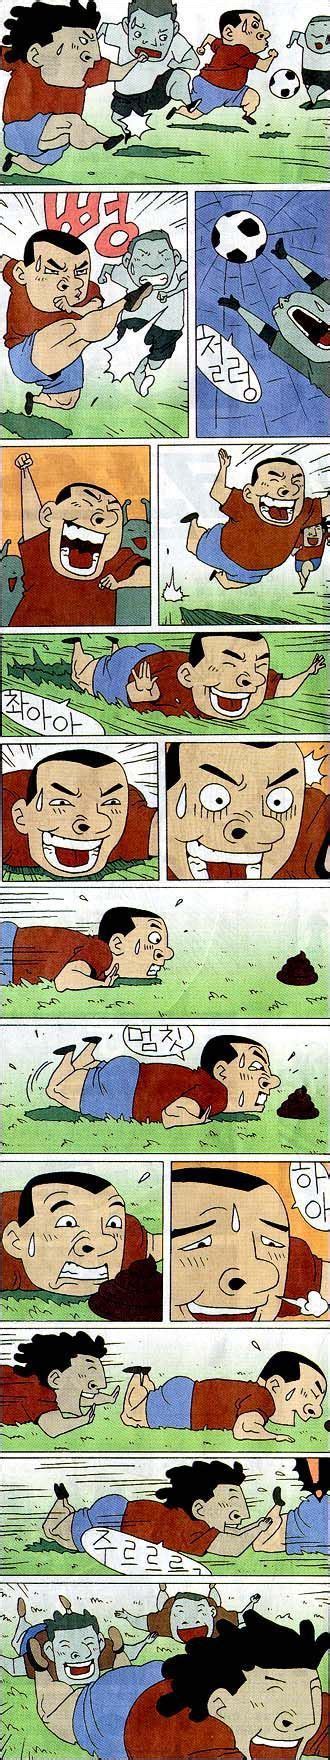 Funny Korean Comic Strips 41 Pics Cold Jokes Adult Humor Laughing